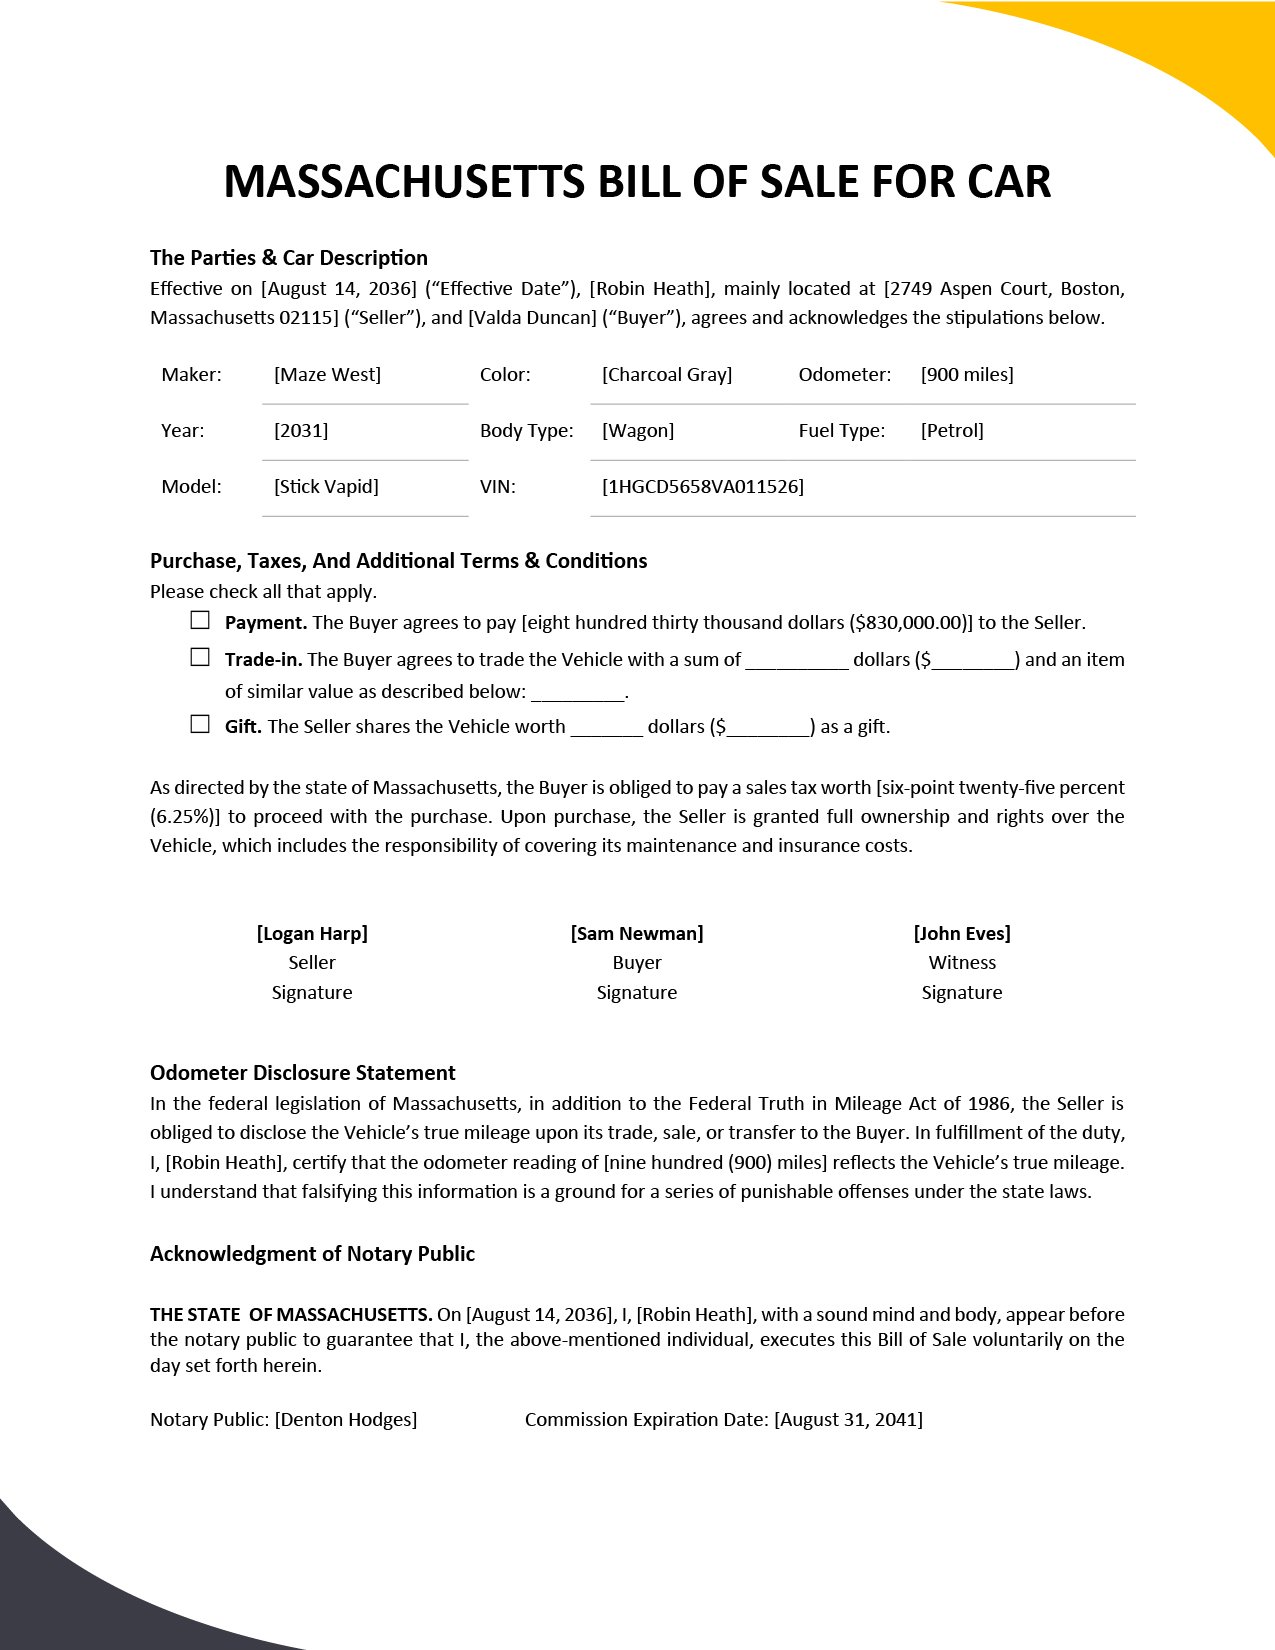 Massachusetts Bill of Sale For Car Template